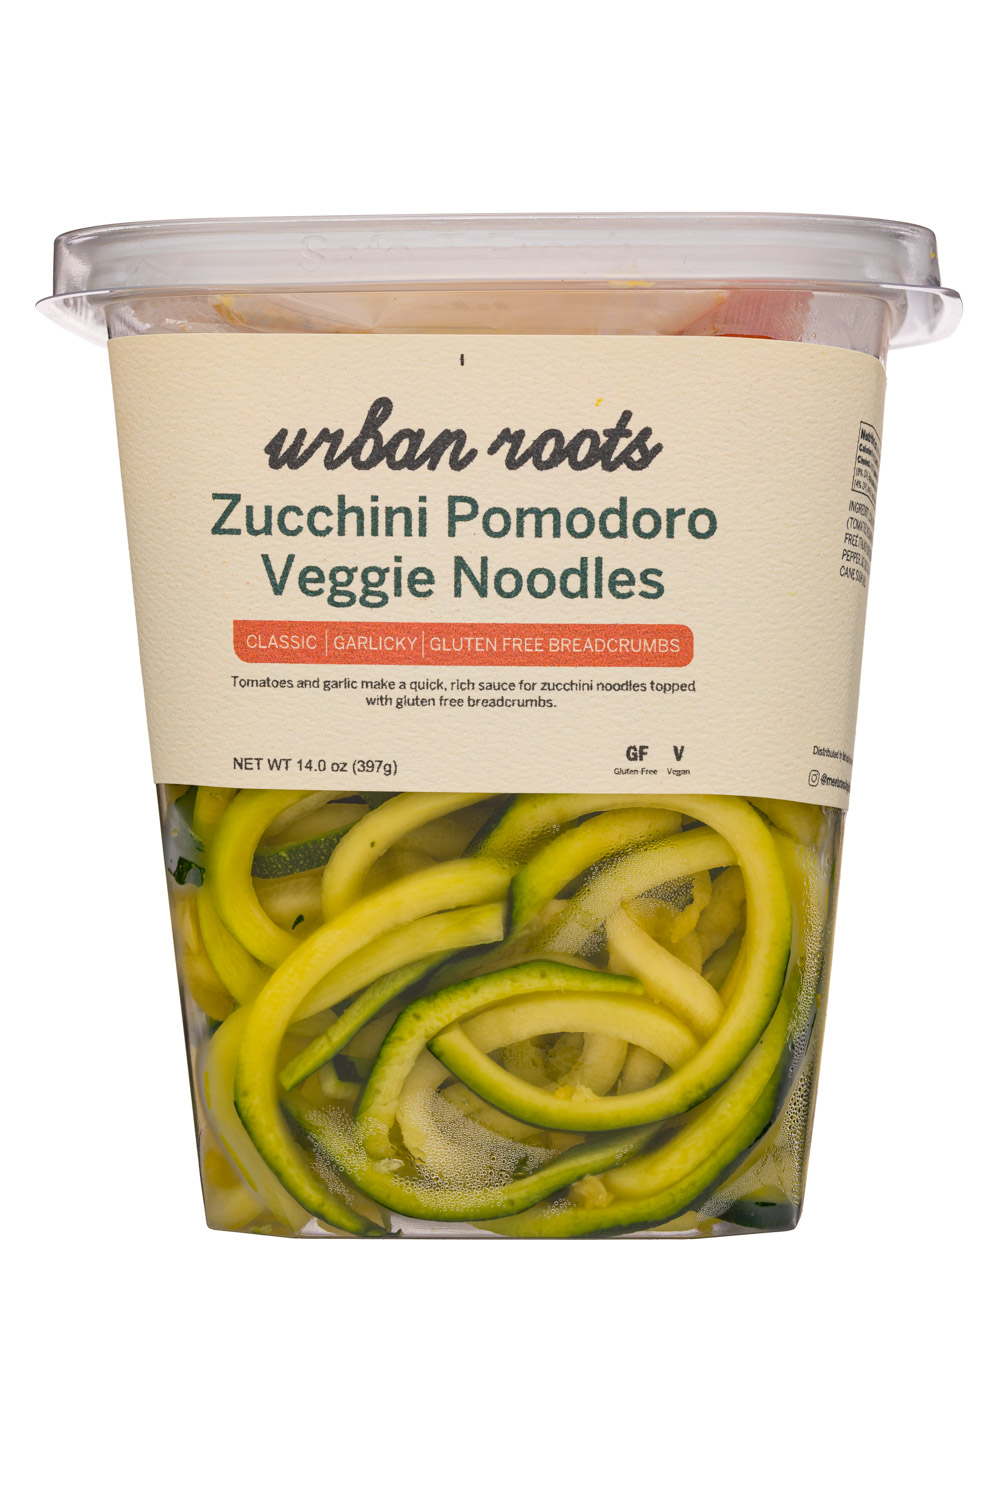 Zucchini Pomodoro Veggie Noodles